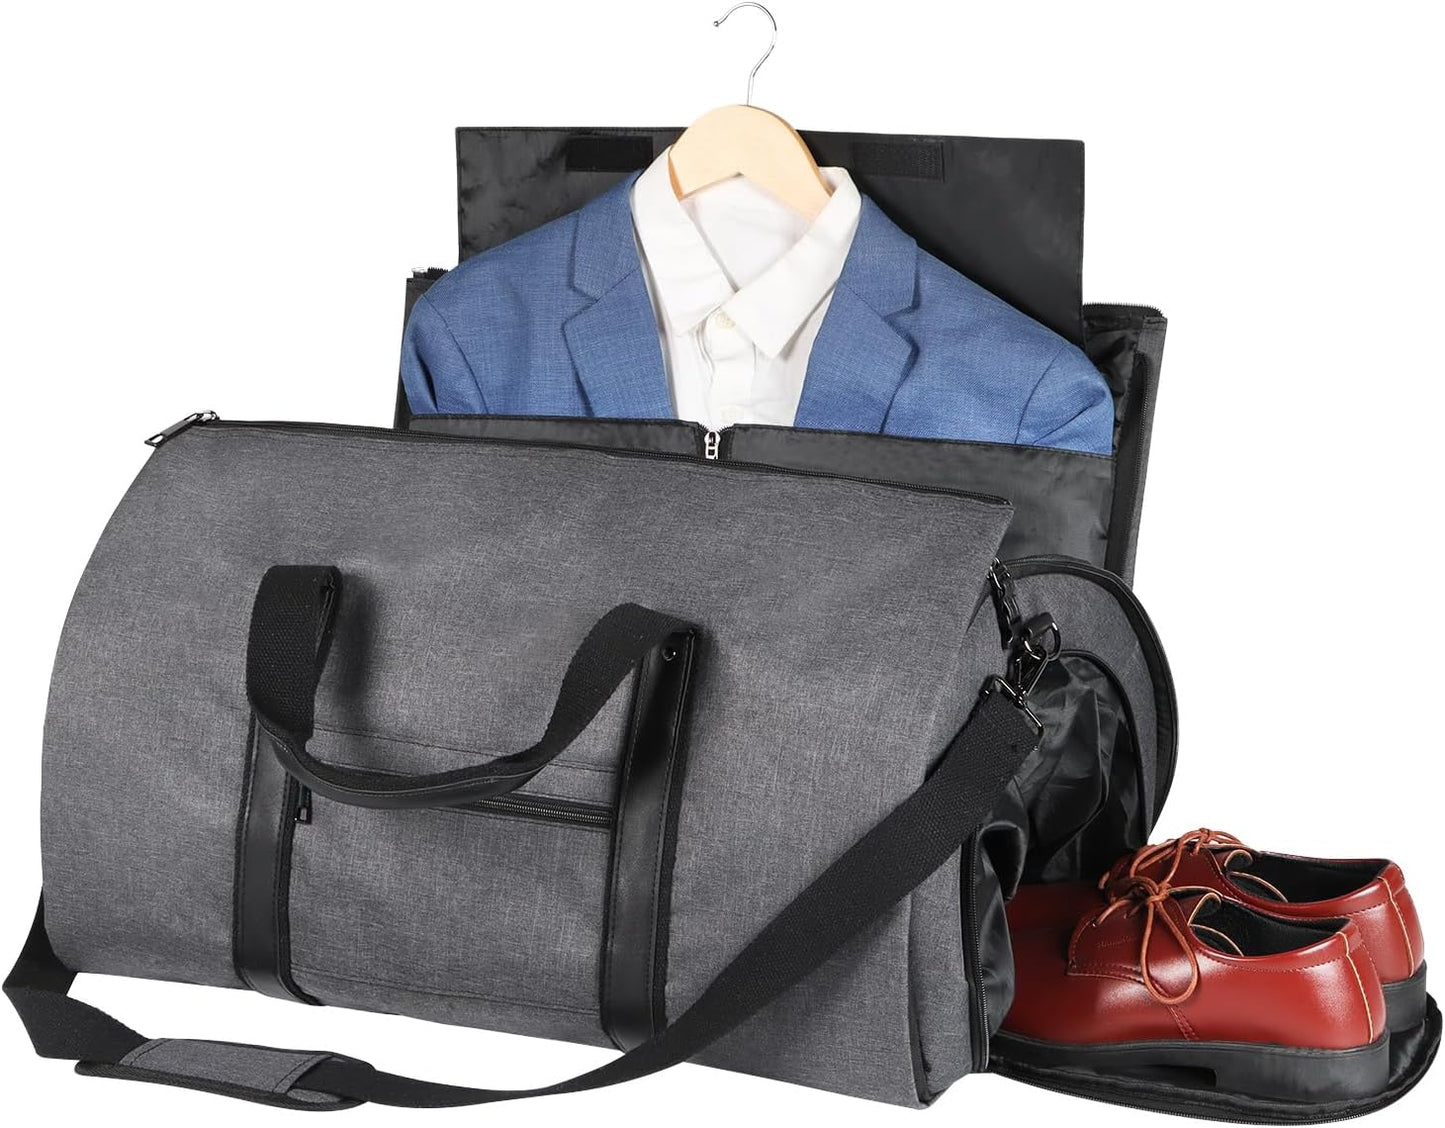 Convertible Garment Bag with Shoulder Strap Carry on Garment Duffel Bag for Men Women - 2 in 1 Hanging Suit Coat Business Travel Bags Weekender Bag